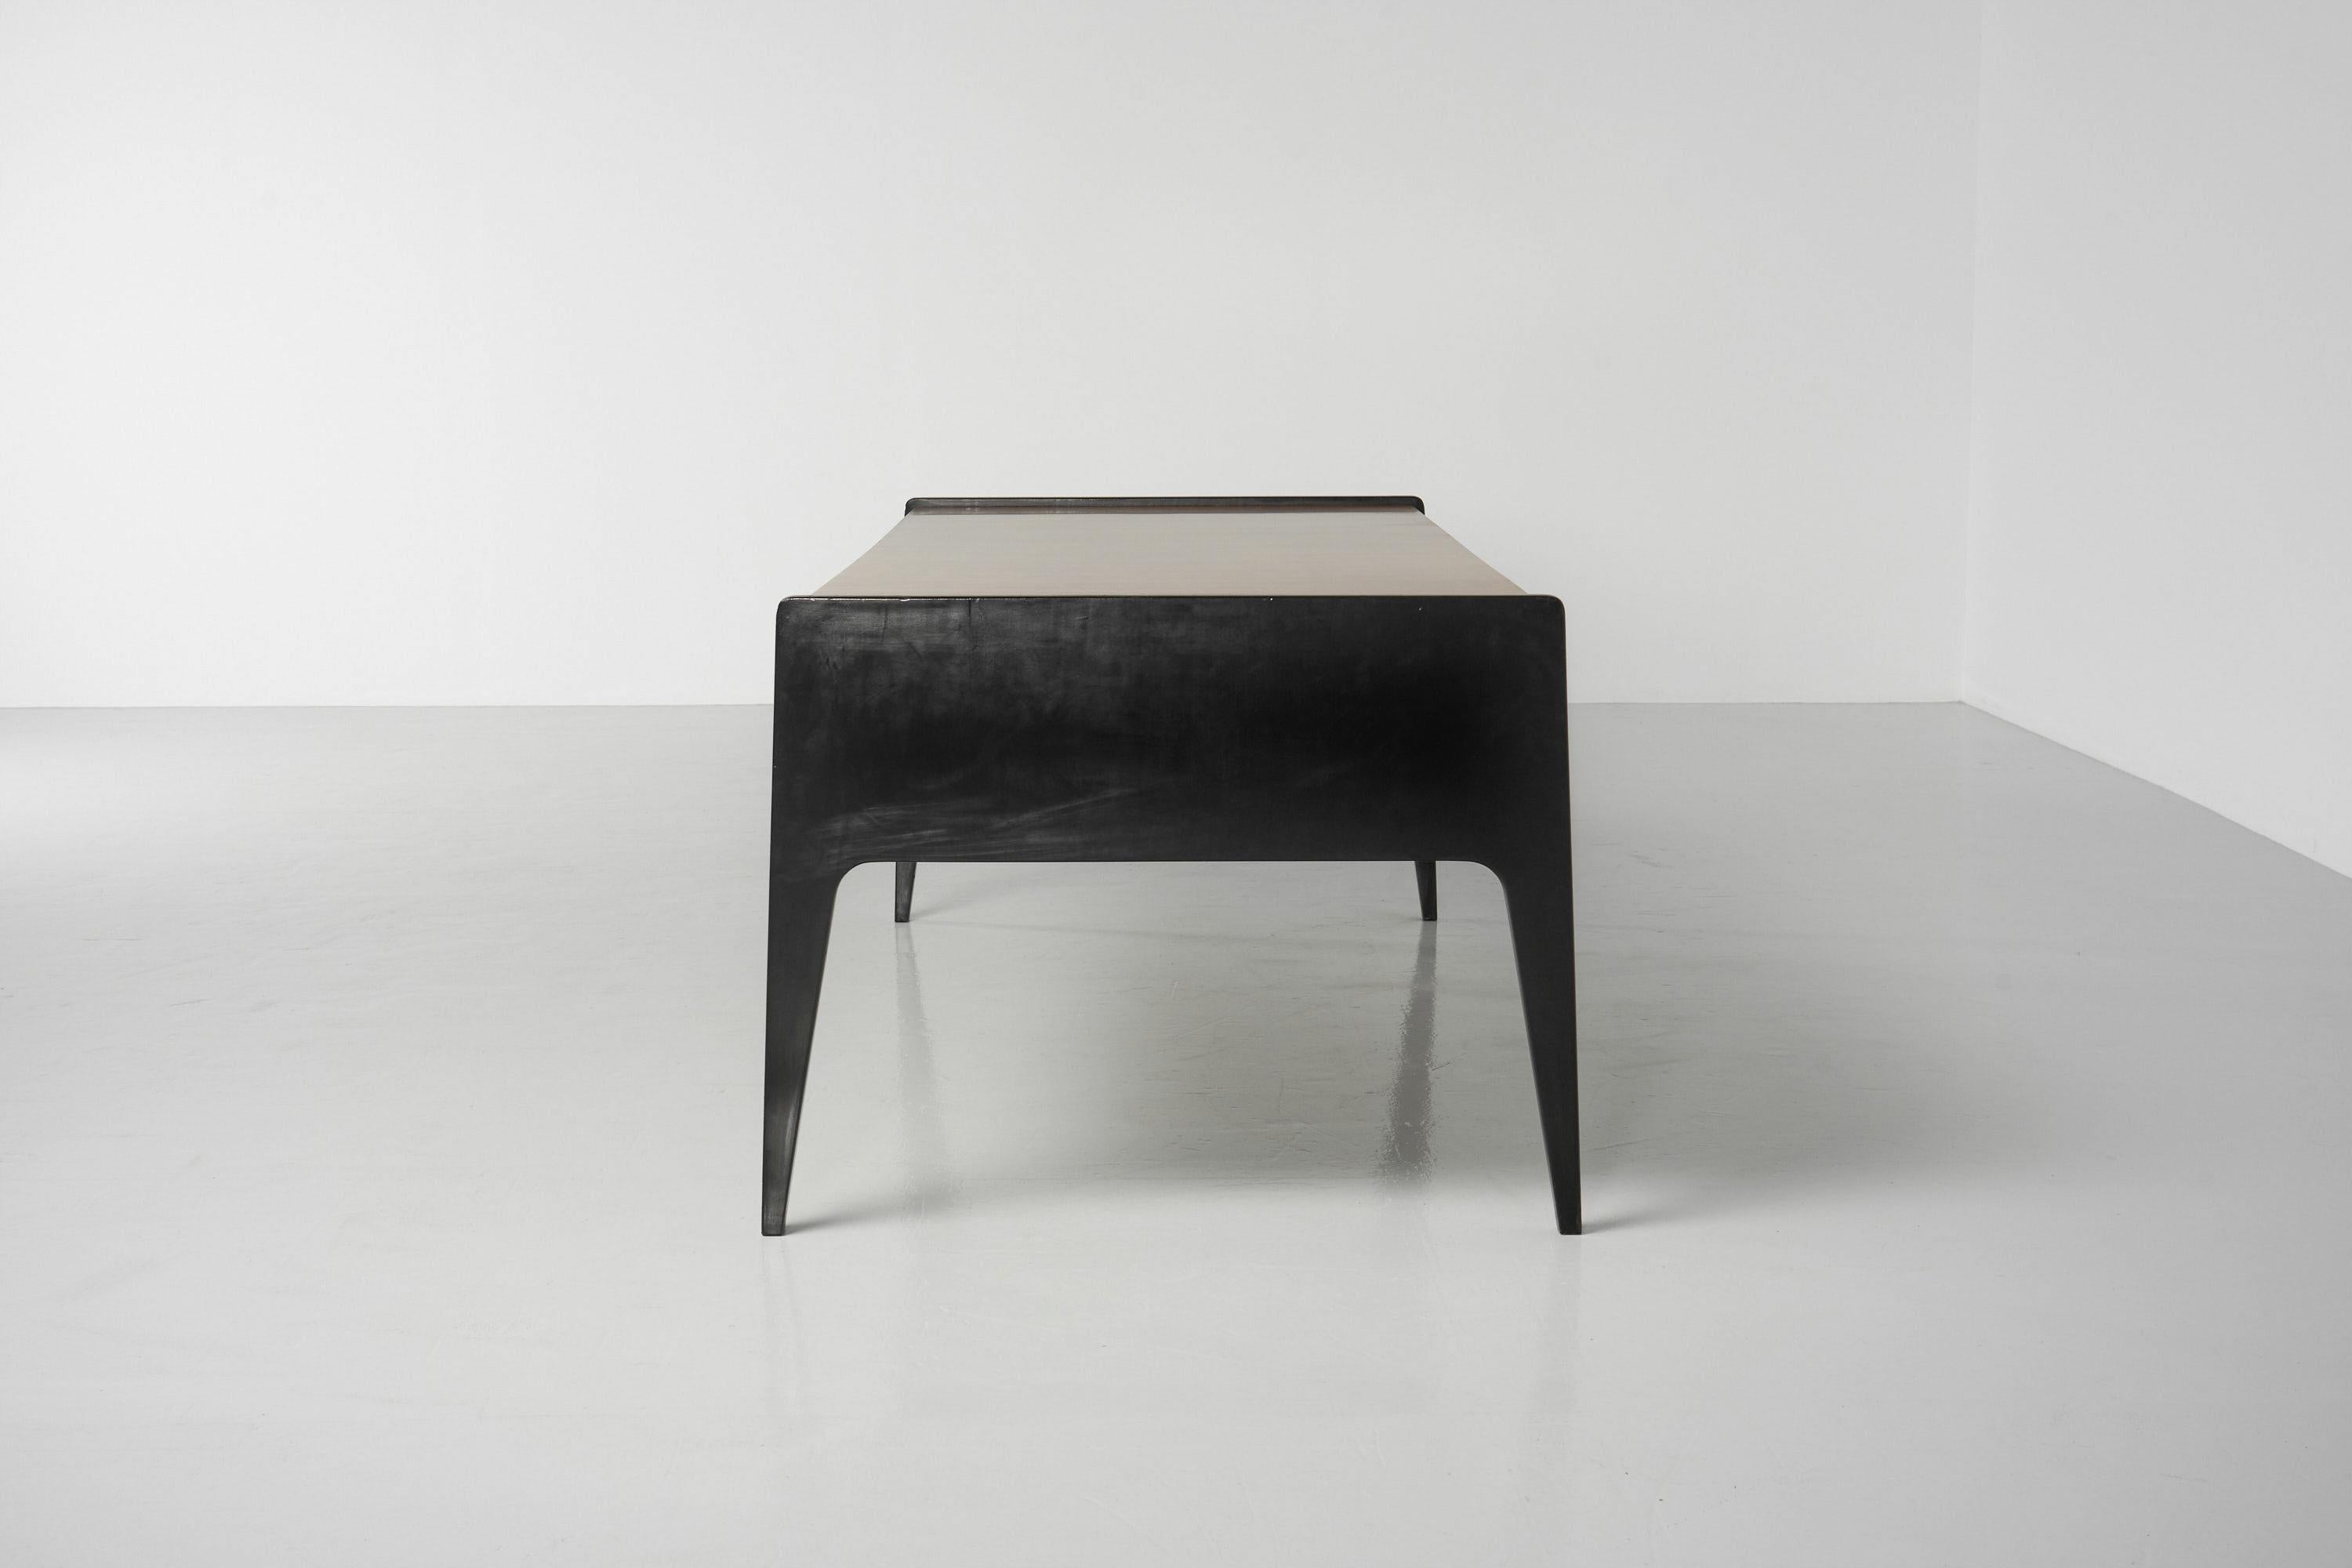 Wood Alfred Hendrickx Custom Made Desk Belform Belgium, 1958 For Sale